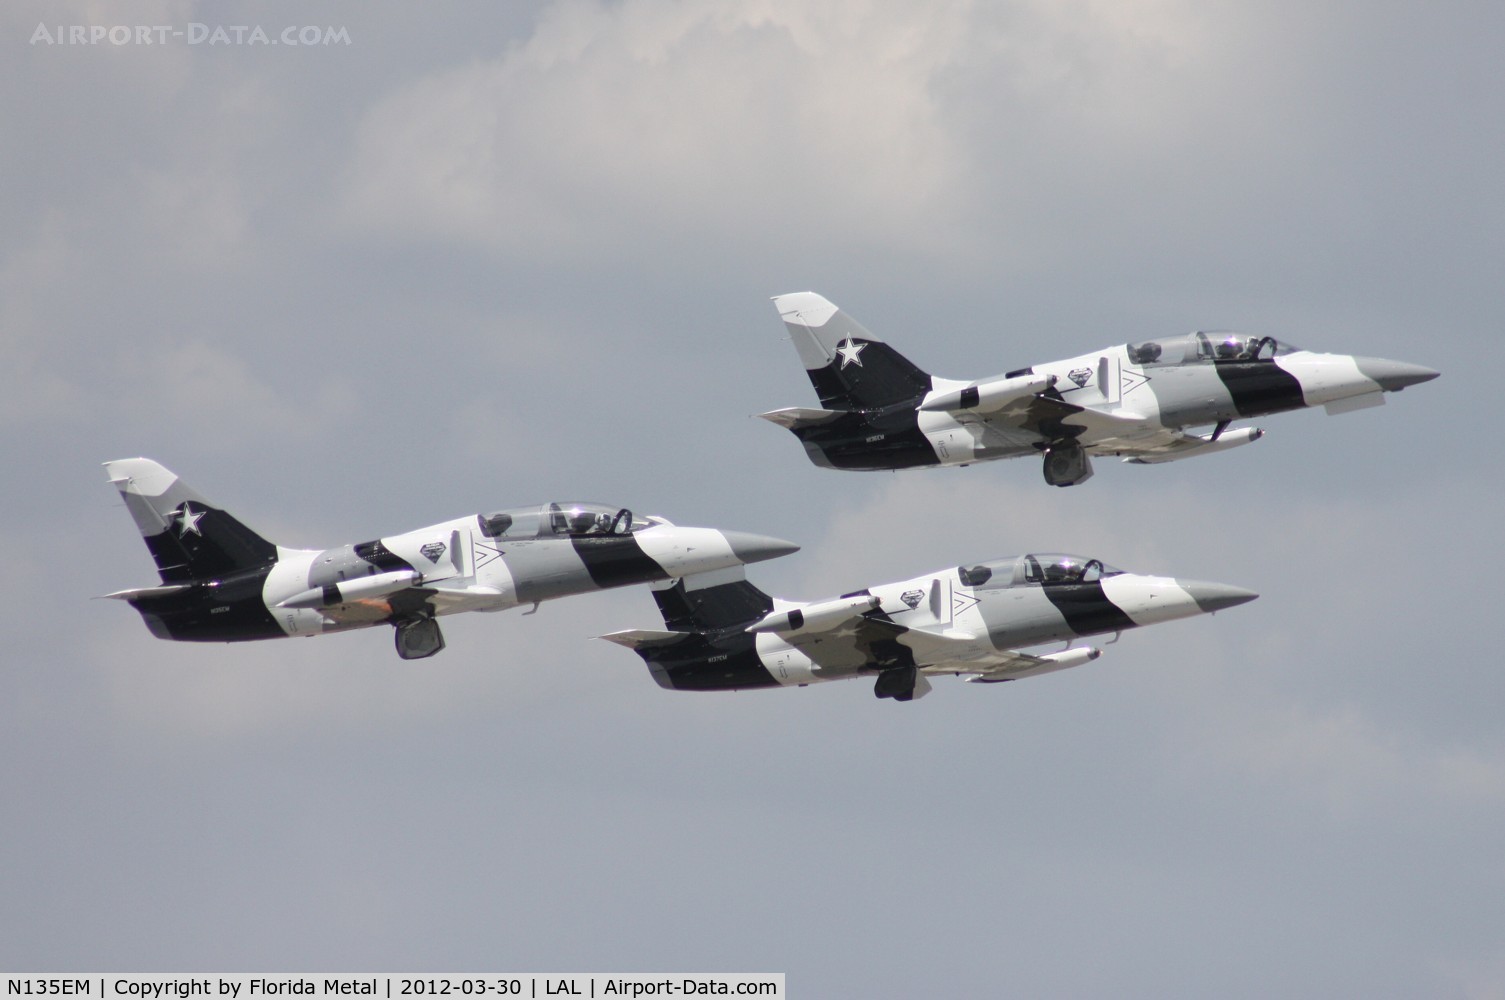 N135EM, Aero L-39ZA Albatros C/N 232406, 3 members of the Black Diamond Jet Team taking off